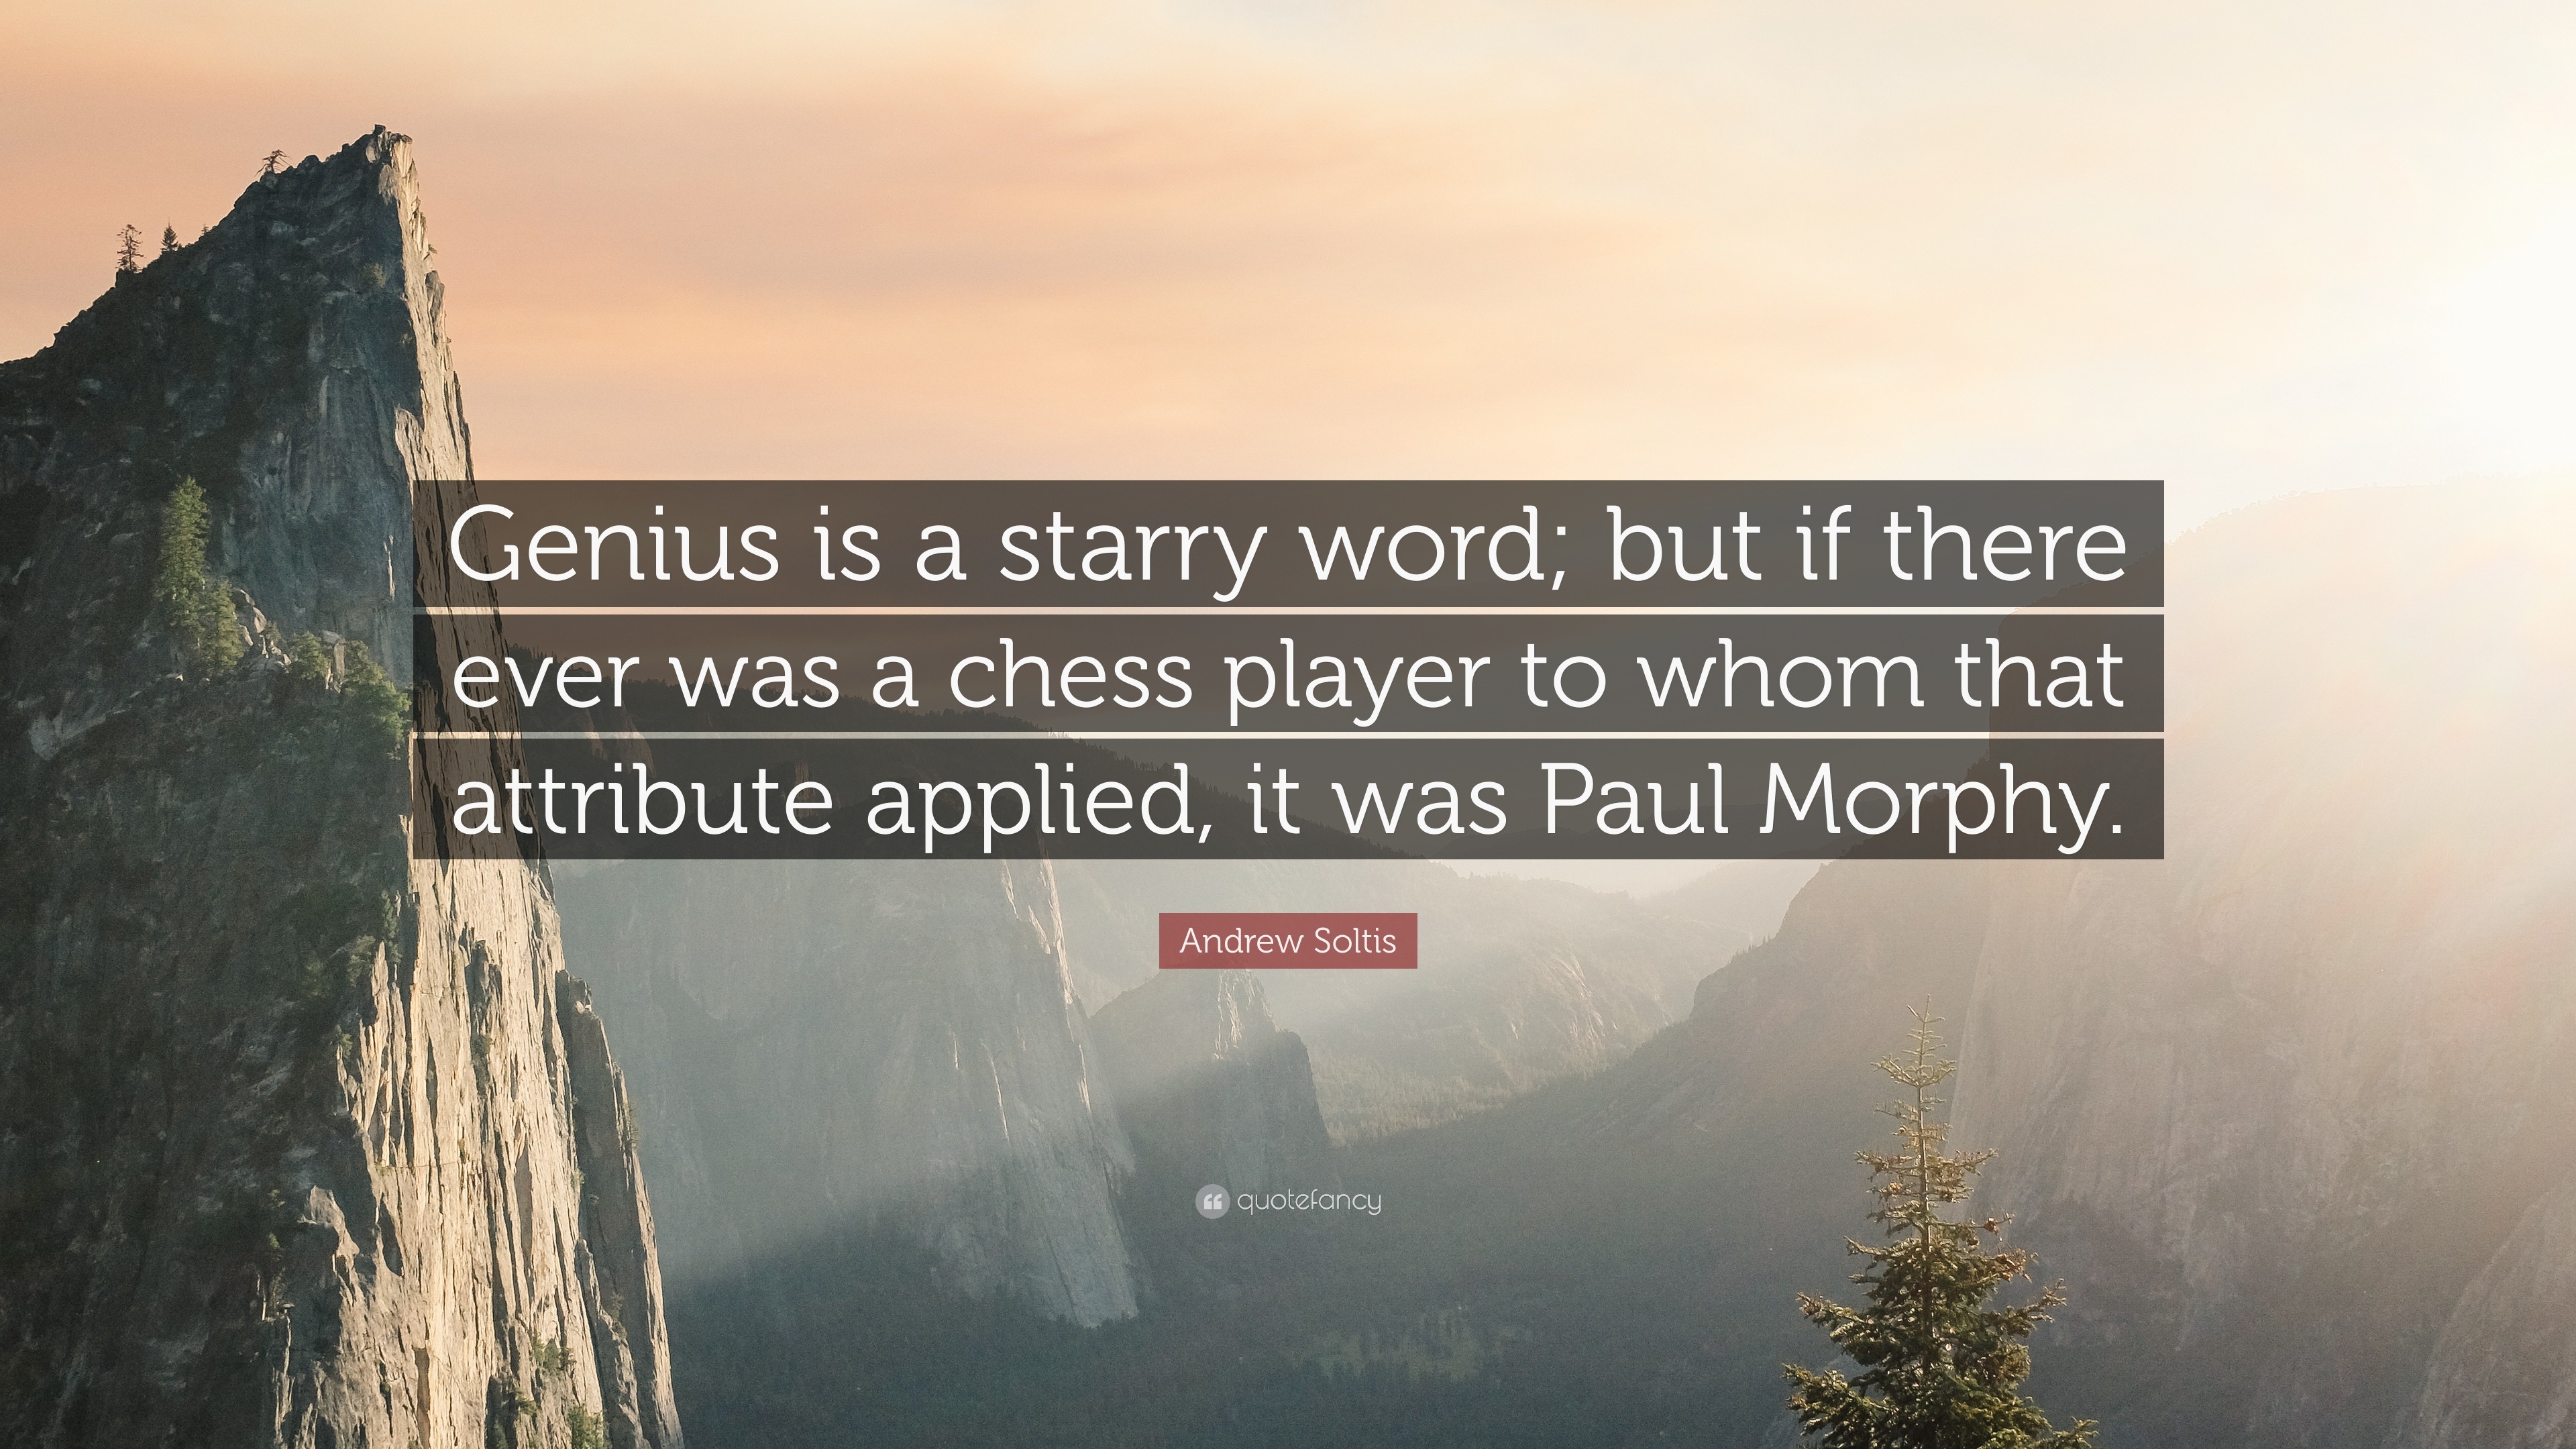 Genius of Paul Morphy